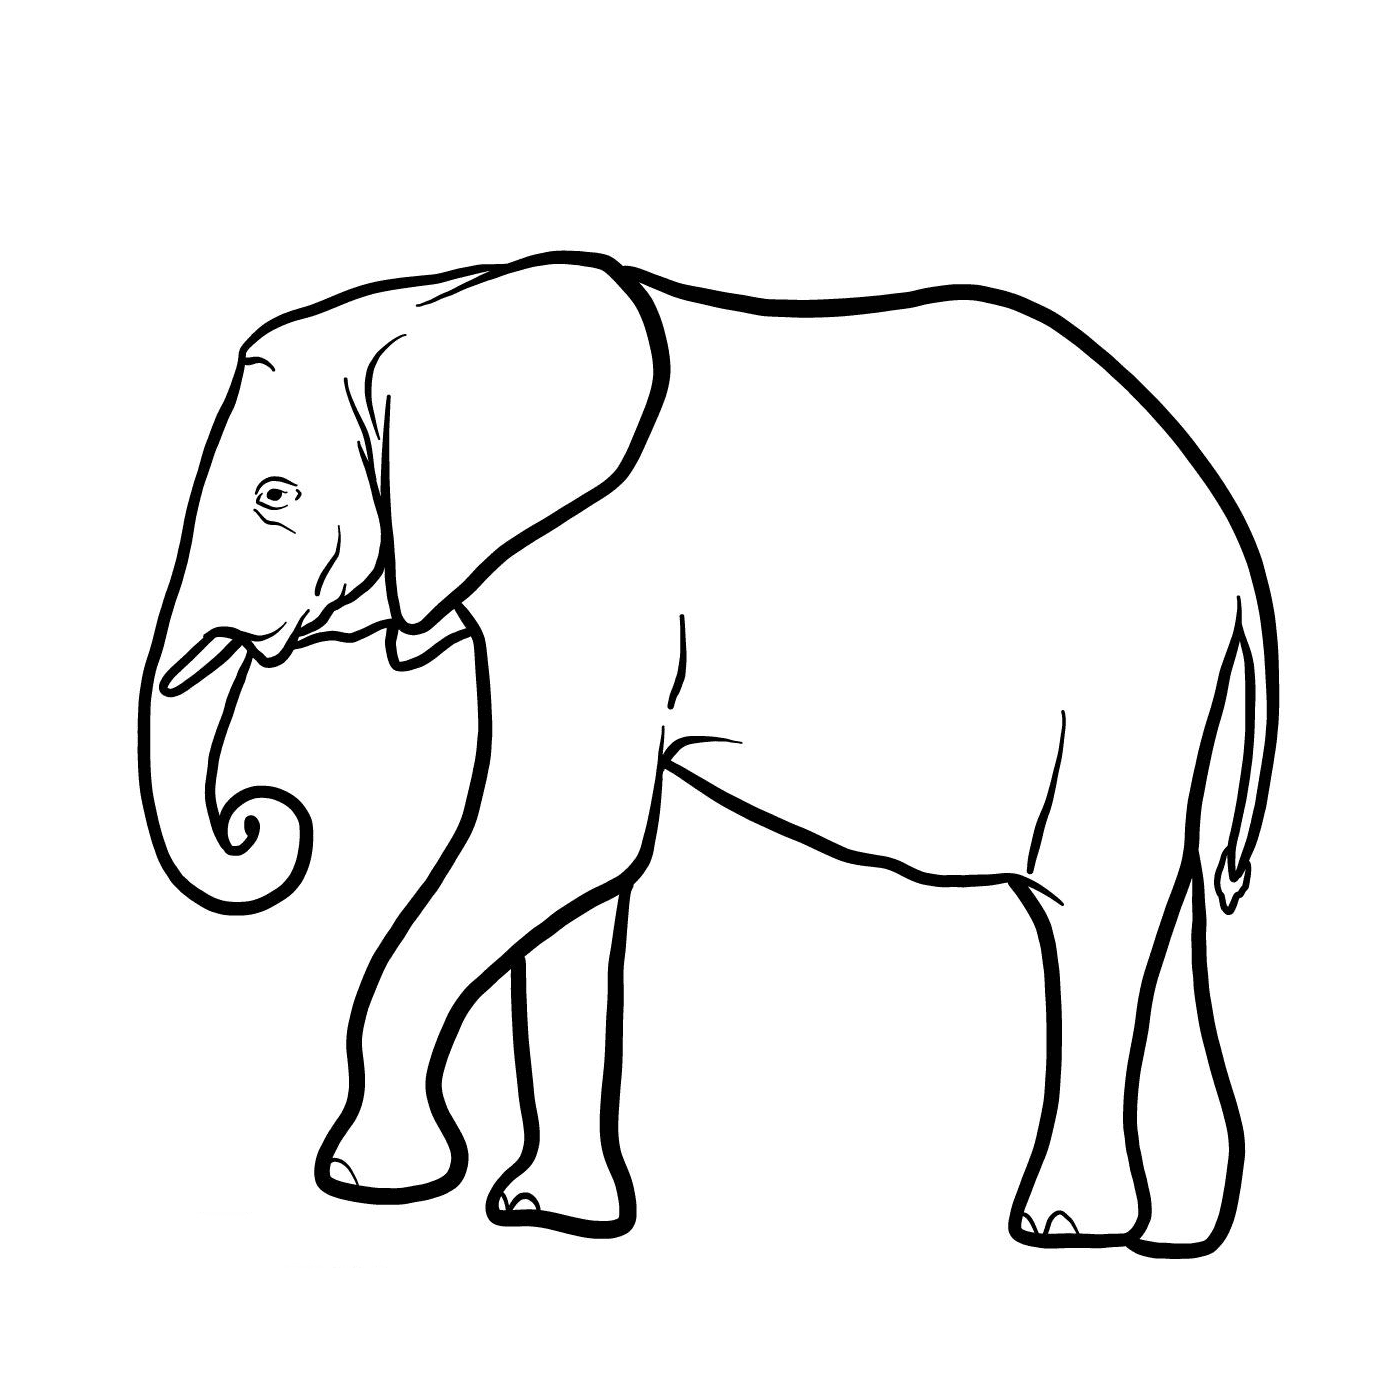  An elephant with a long trunk 